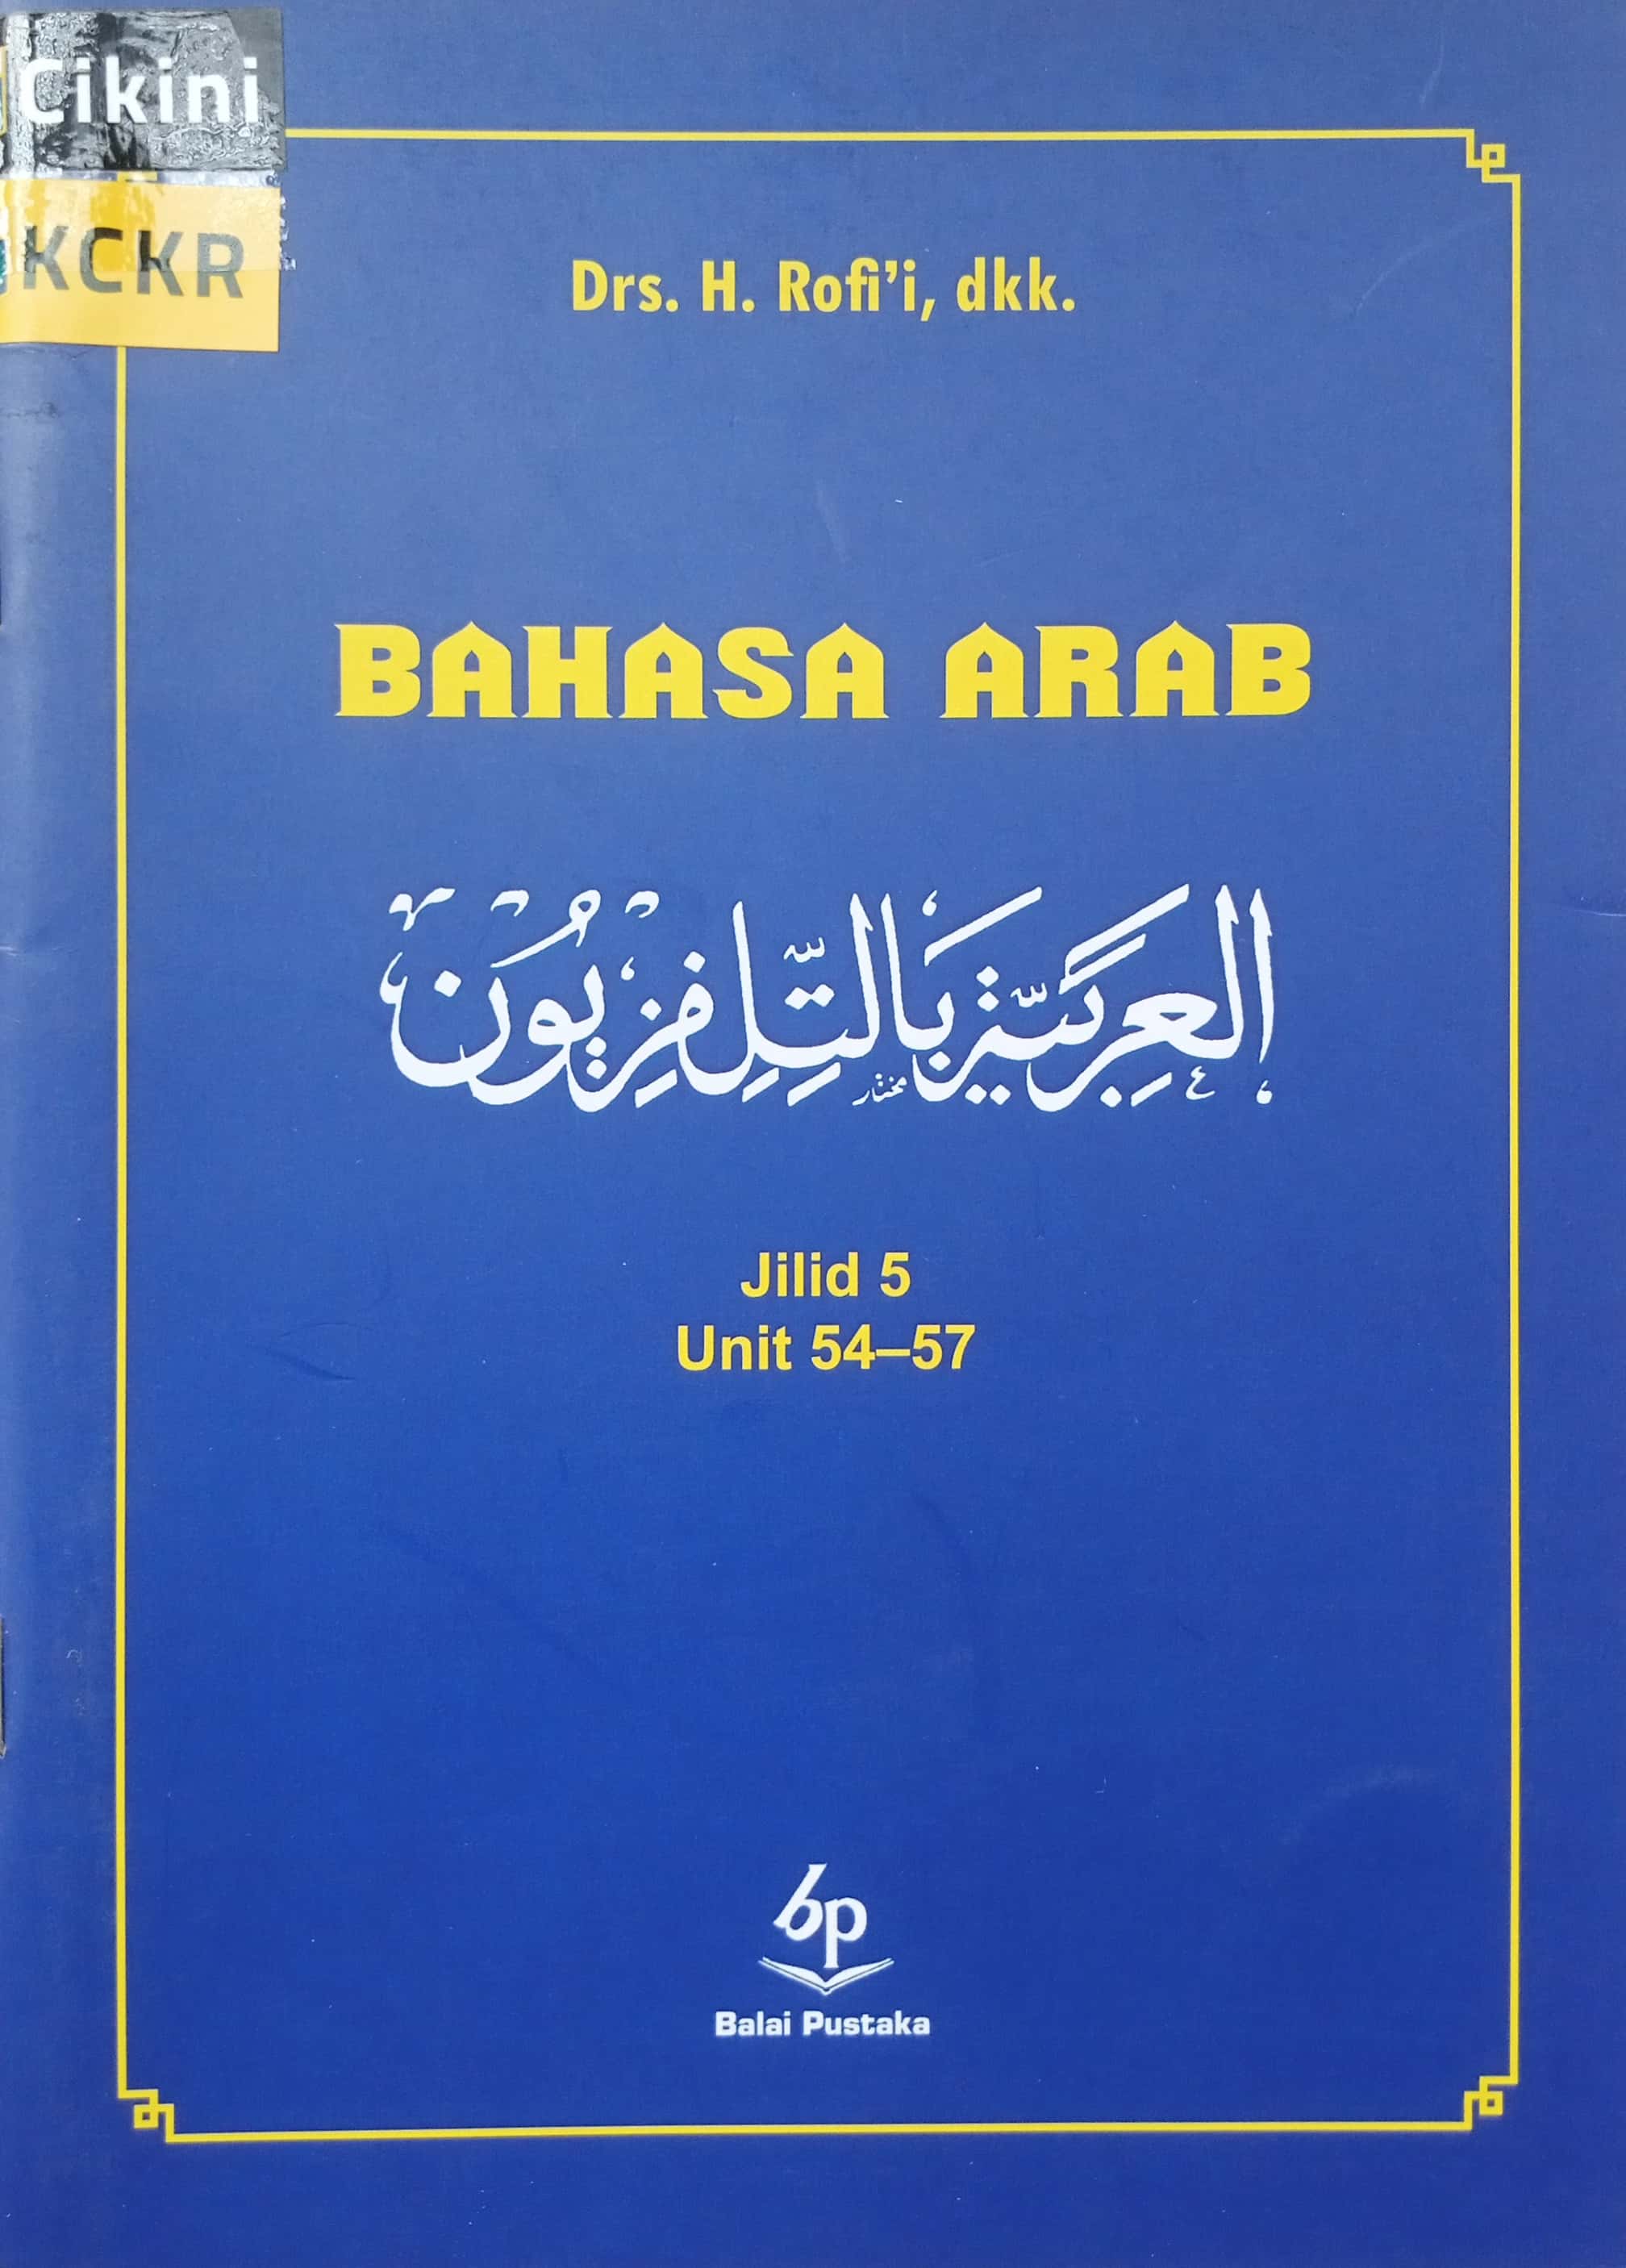 Bahasa Arab jilid 5 unit 54-57